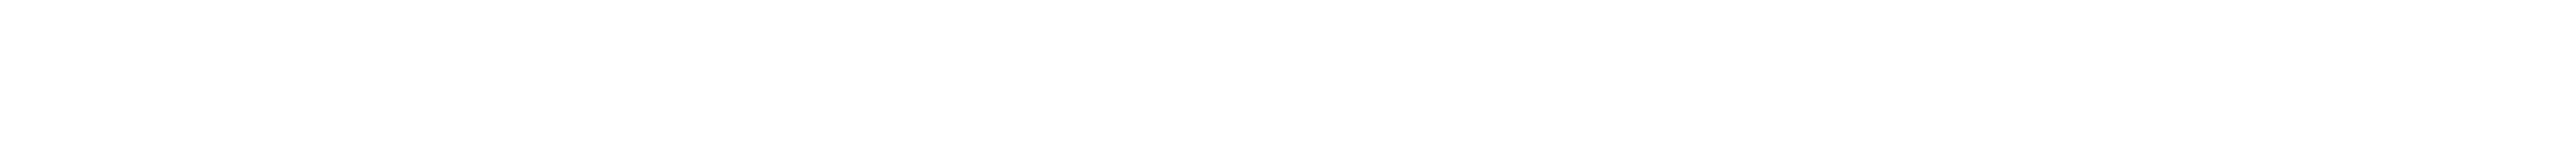 कृष्ण सदा सहायते ॥ stylish signature style. Best Handwritten Sign (Autography-DOLnW) for my name. Handwritten Signature Collection Ideas for my name कृष्ण सदा सहायते ॥. कृष्ण सदा सहायते ॥ signature style 10 images and pictures png